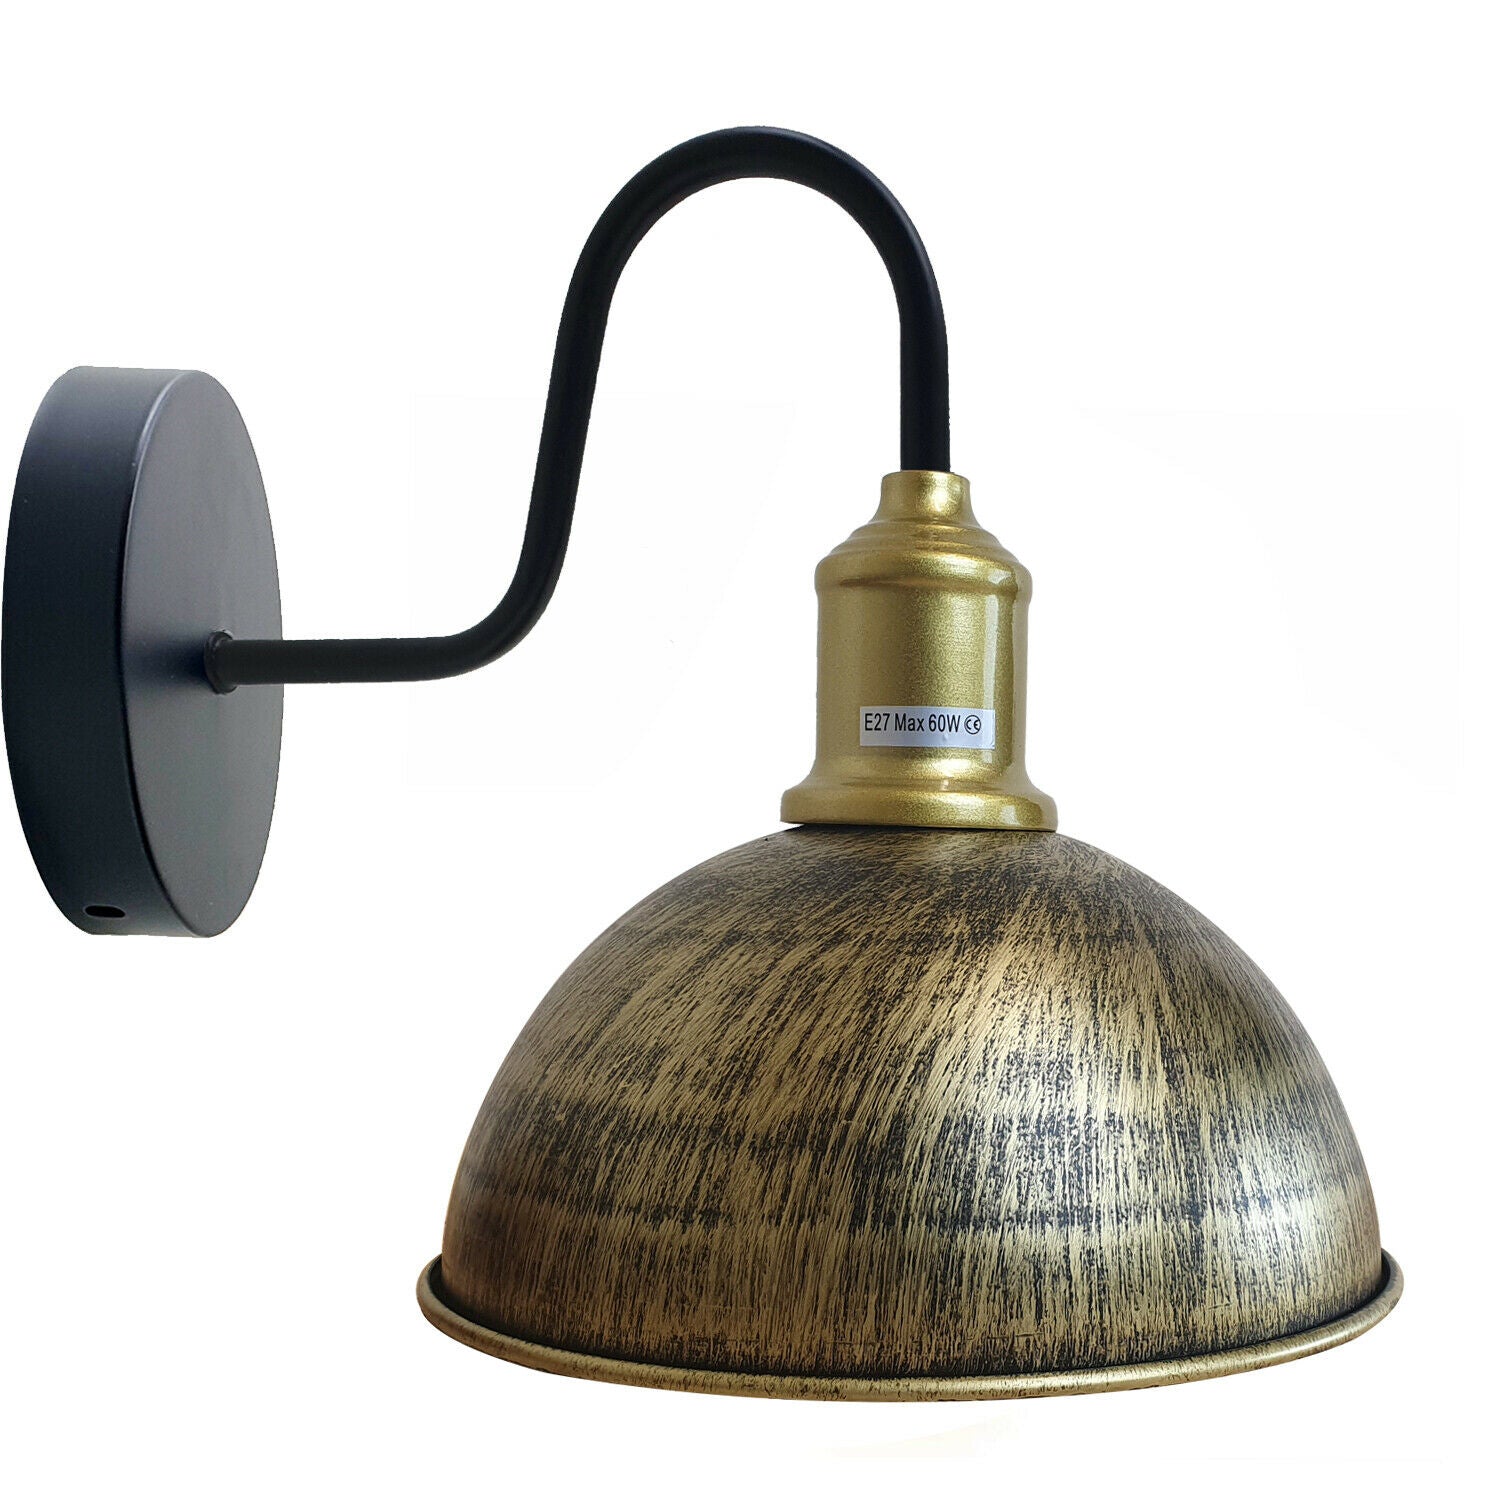 Half Round Shape Modern Vintage Retro Rustic Sconce Wall Light Lamp Fitting Fixture~1792 - LEDSone UK Ltd